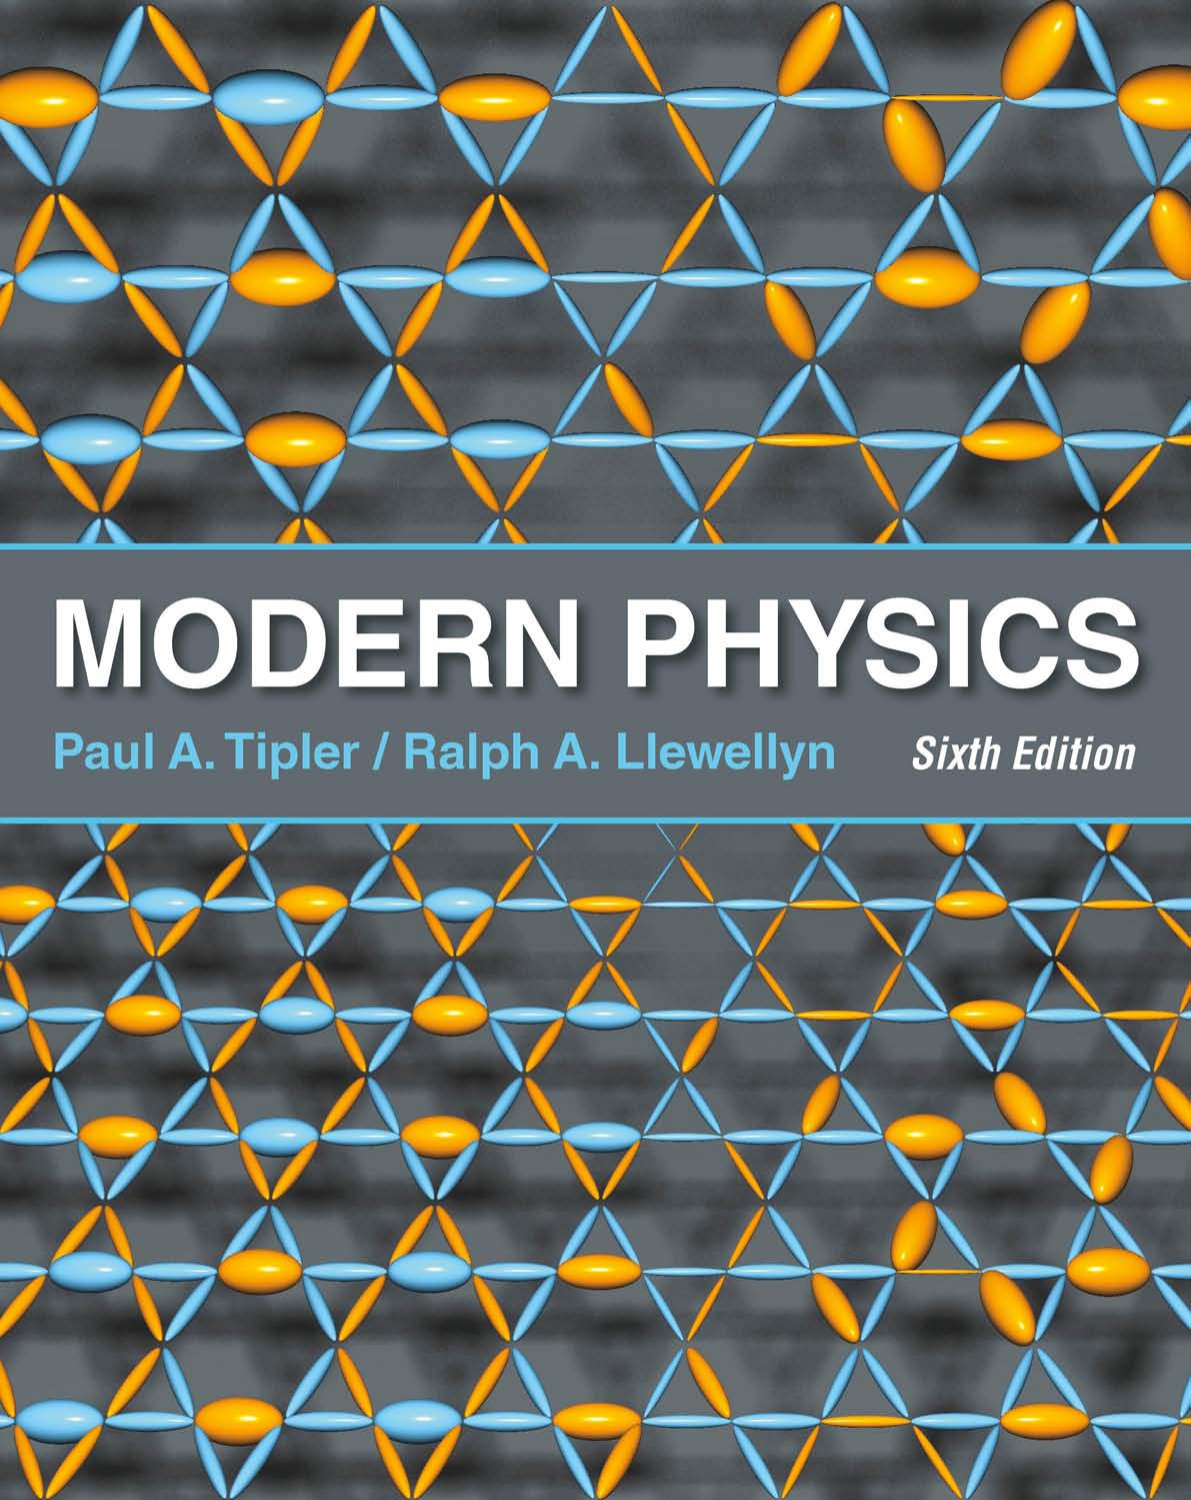 modern physics essay